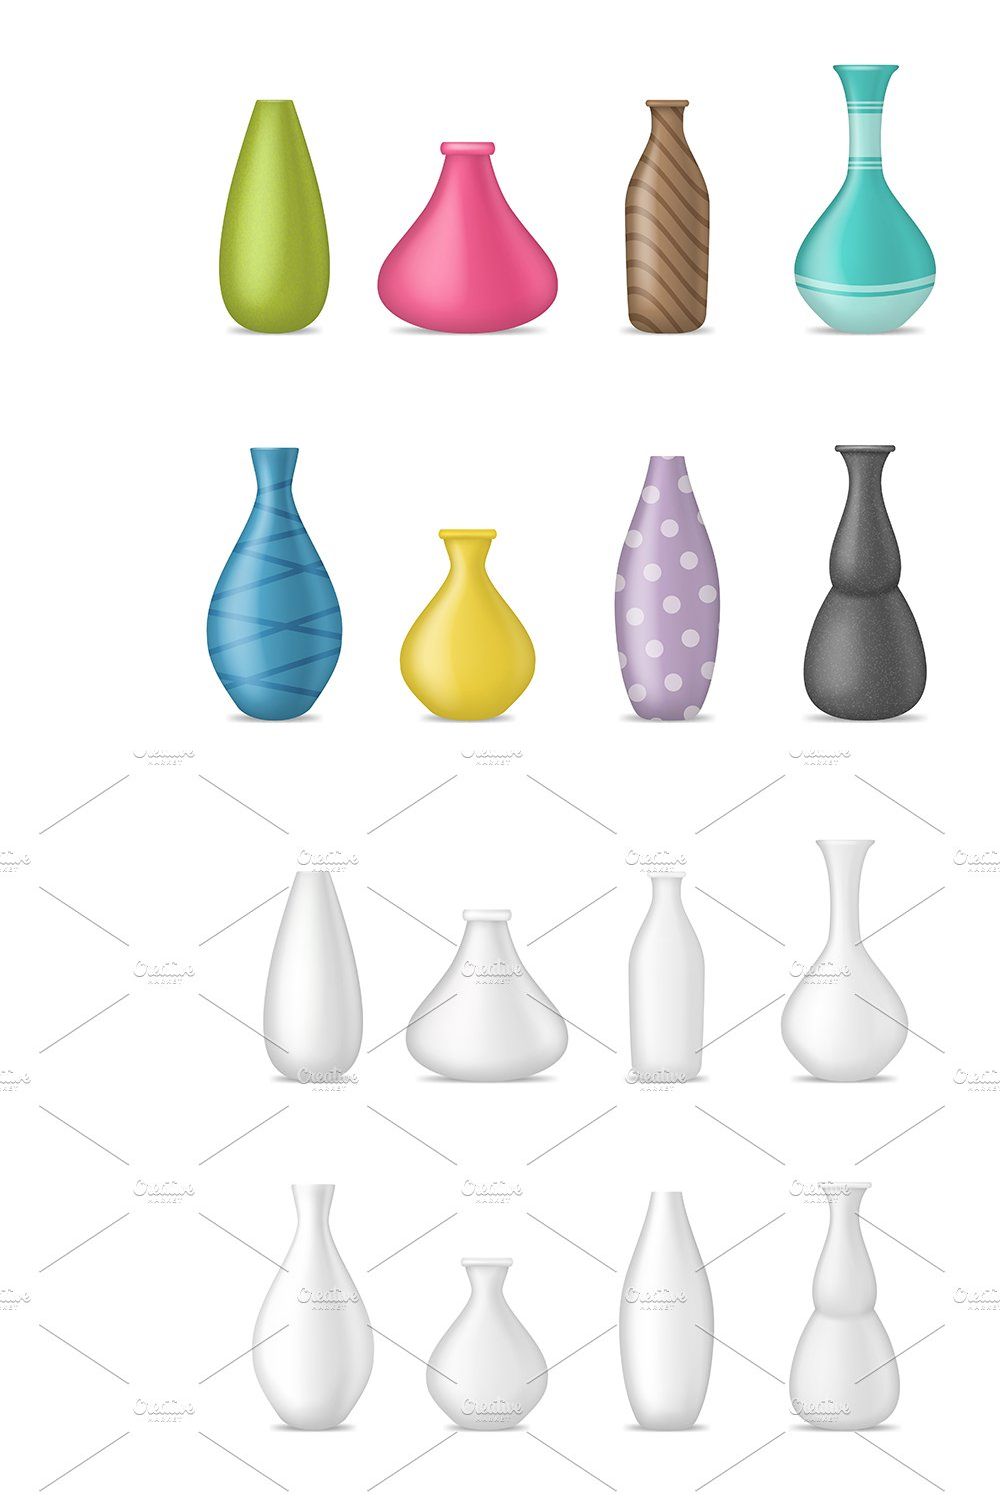 Realistic 3d Detailed Ceramic Vase pinterest preview image.